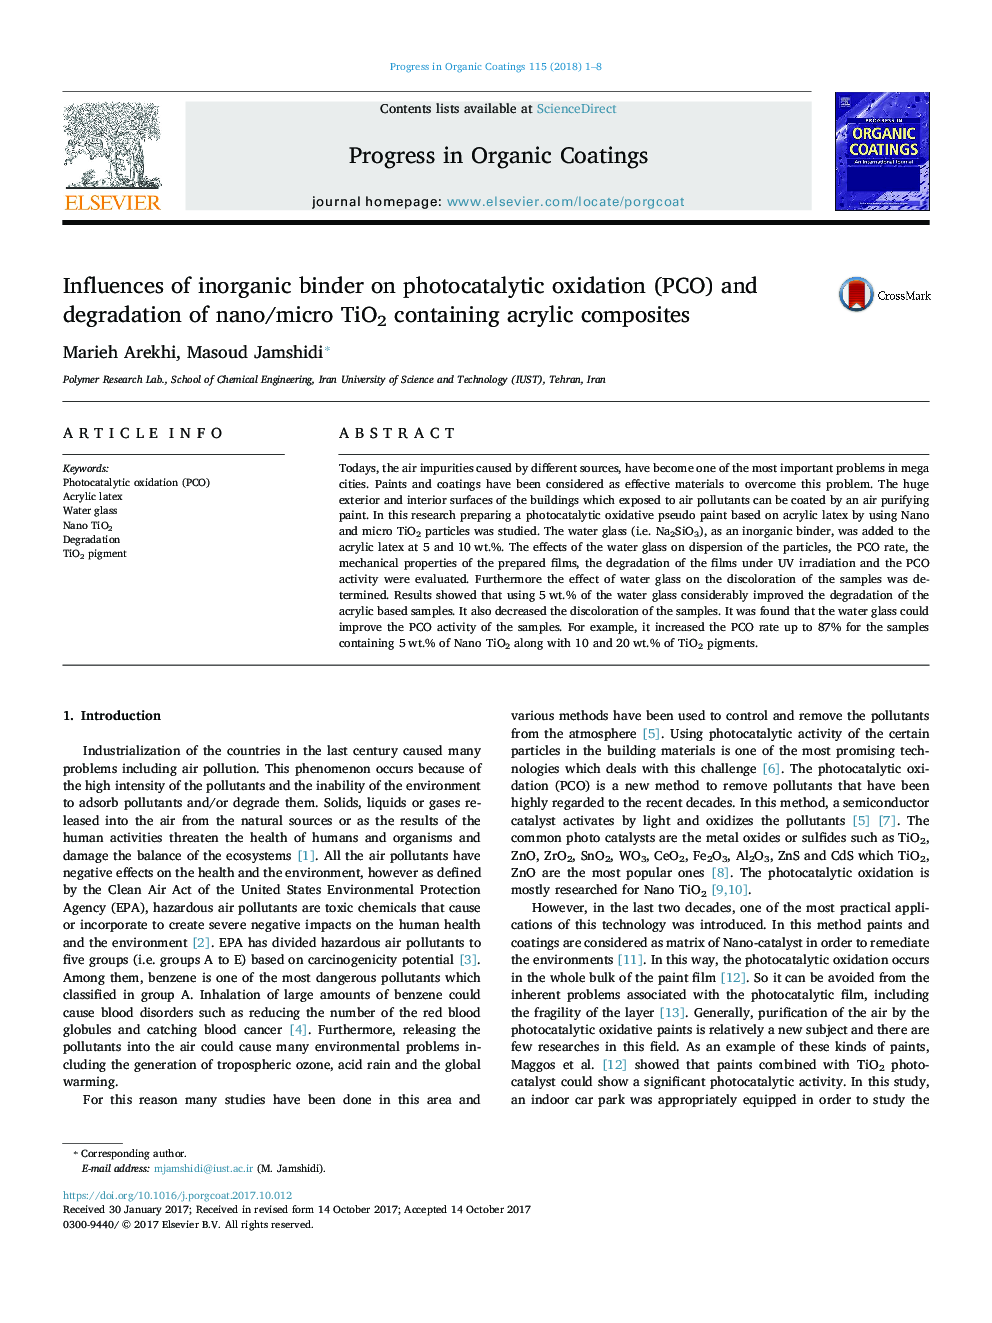 Influences of inorganic binder on photocatalytic oxidation (PCO) and degradation of nano/micro TiO2 containing acrylic composites